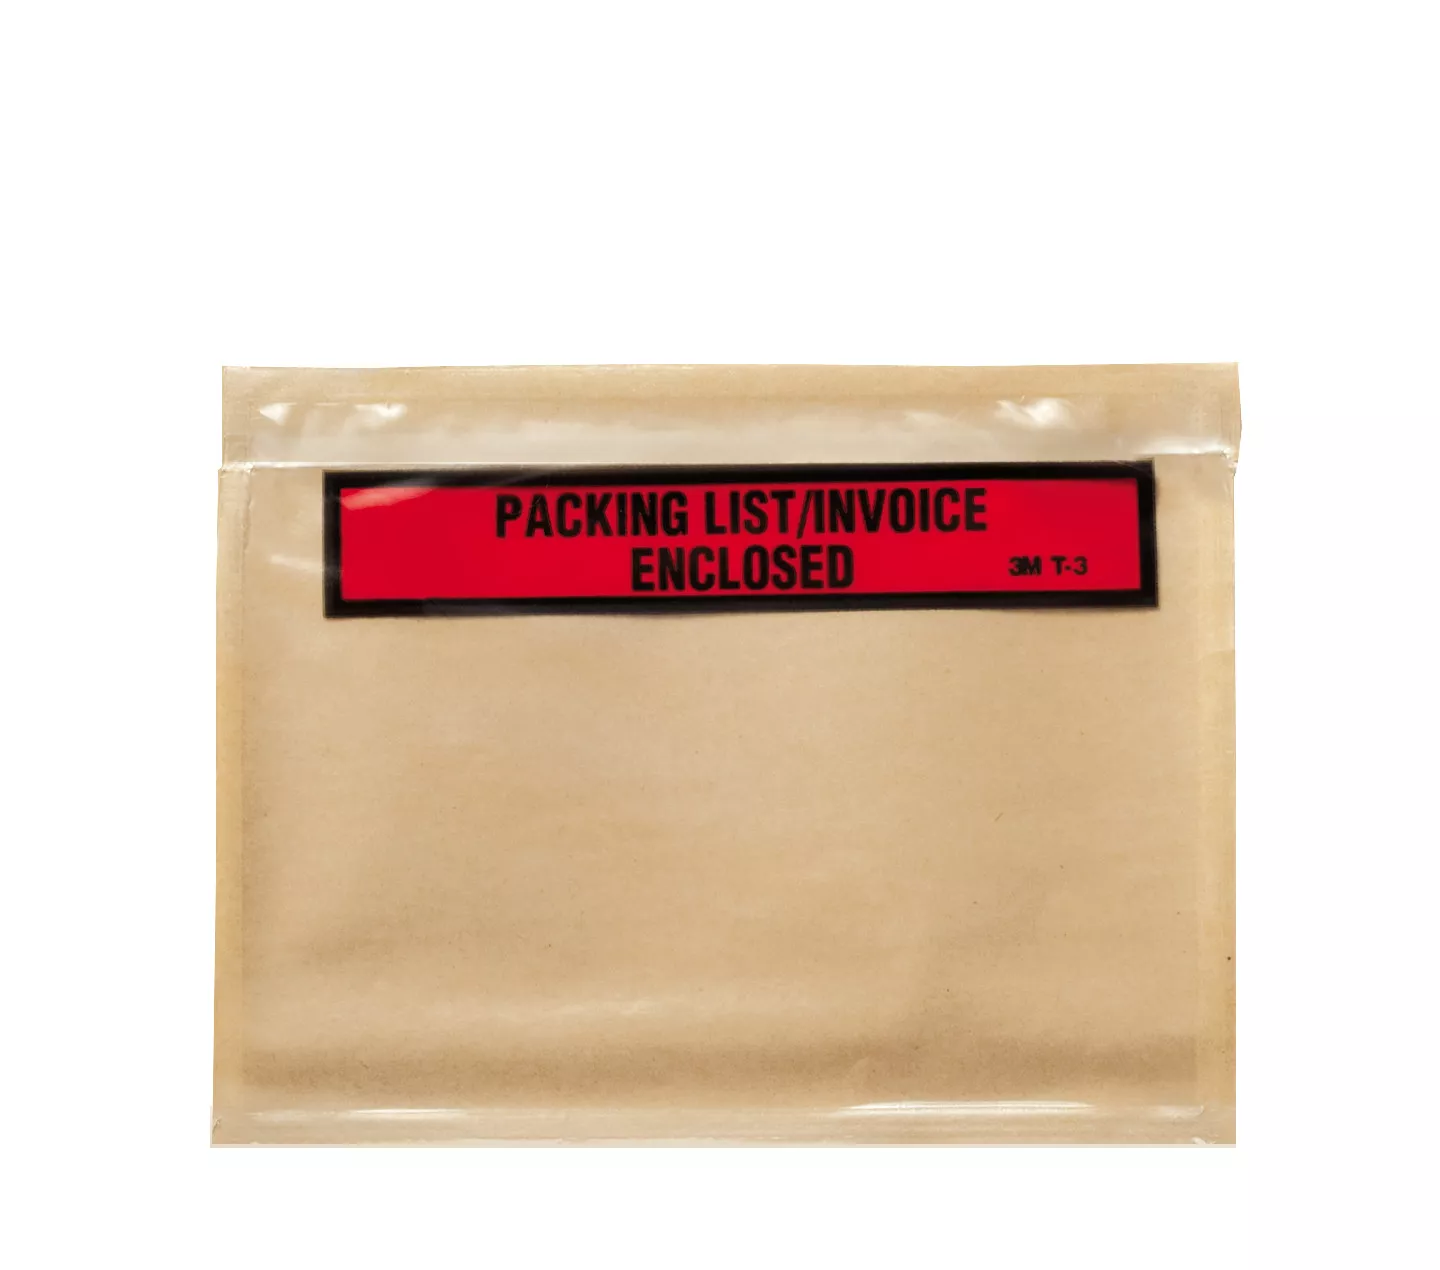 3M™ Top Print Packing List Envelope PLE-T3, 7 in x 5-1/2 in, Case